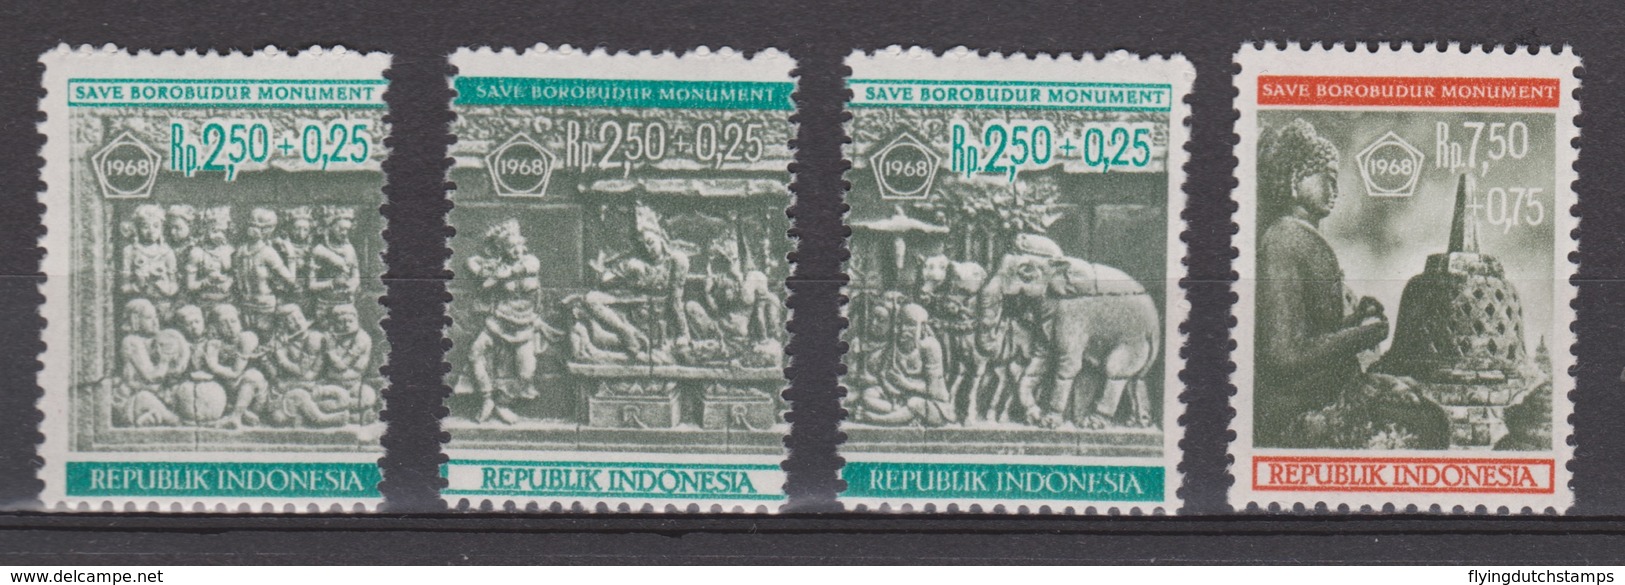 Indonesie 603-604 MNH ; BOROBUDUR 1968 ; NOW MANY STAMPS INDONESIA VERY CHEAP - Denkmäler